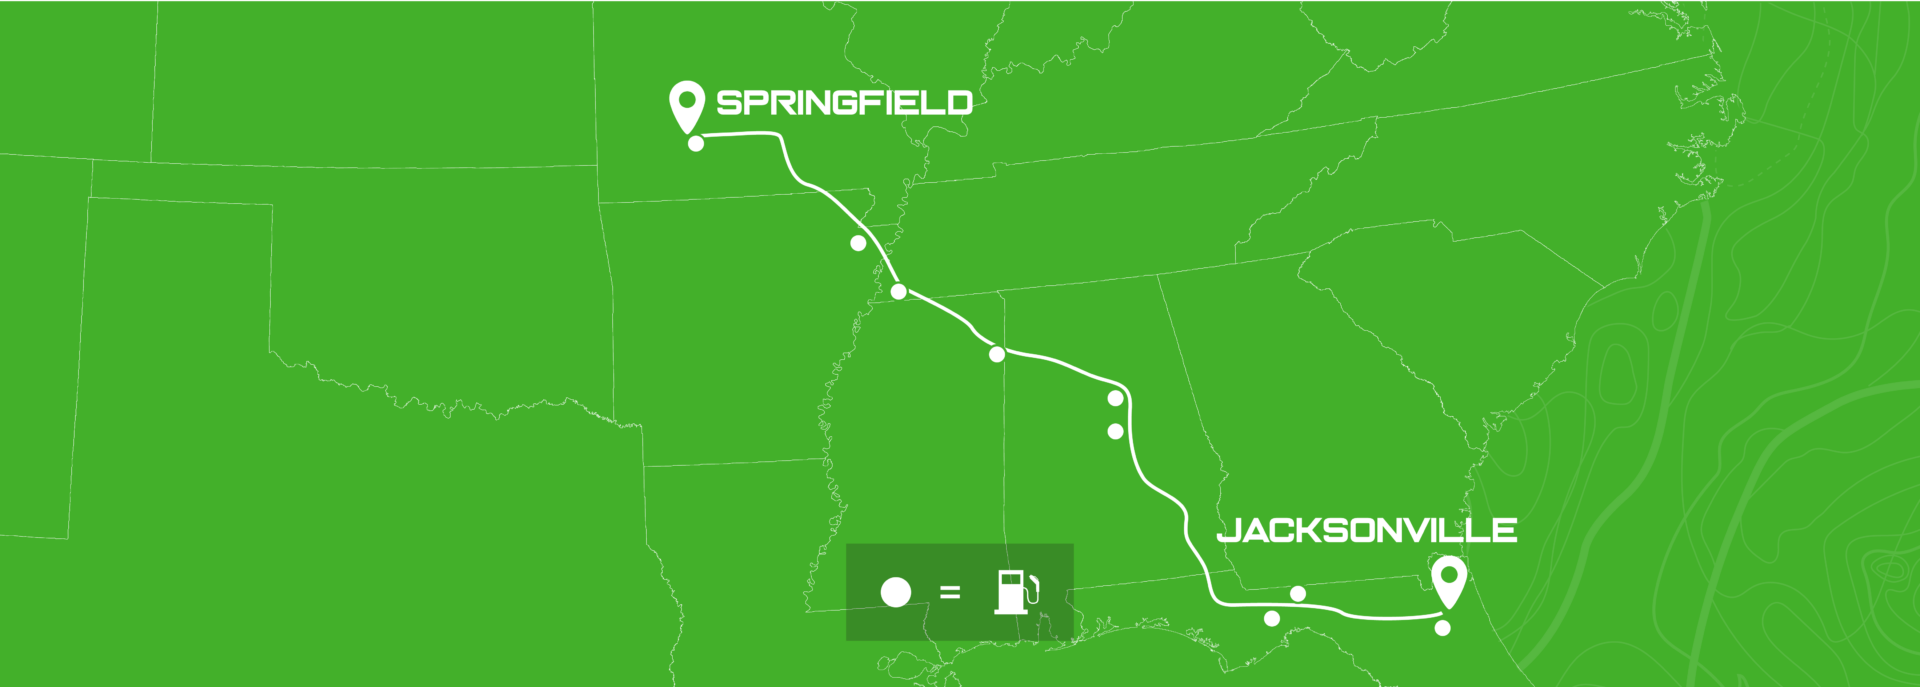 Springfield to Jacksonville - 980 miles